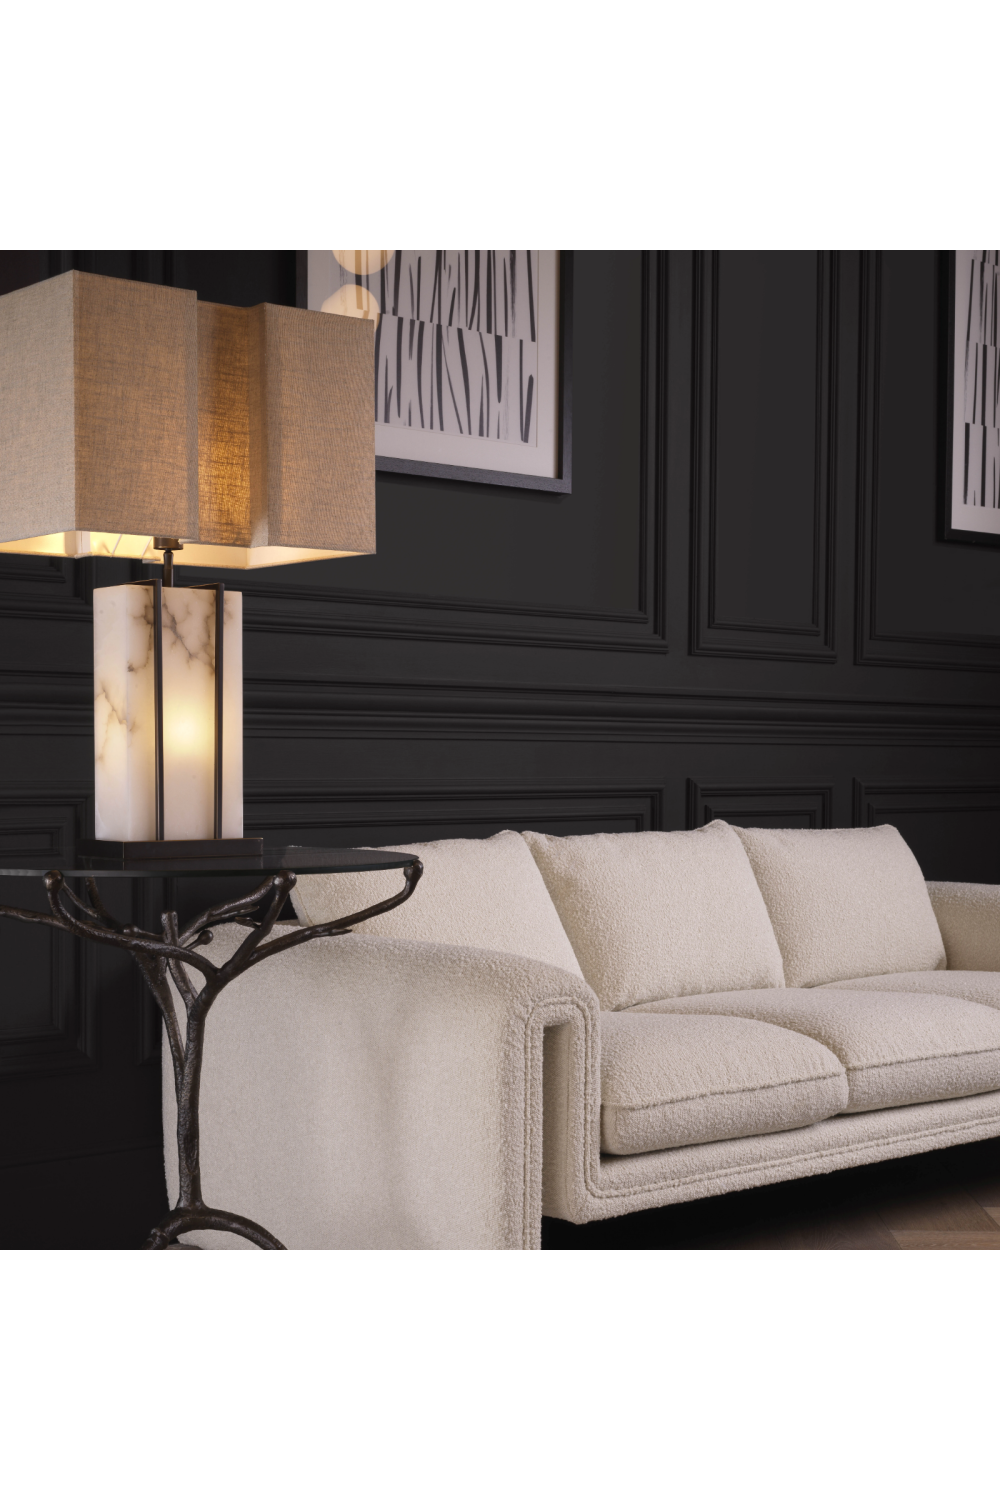 Linen Shade Modern Table Lamp | Eichholtz Graham | OROA.com